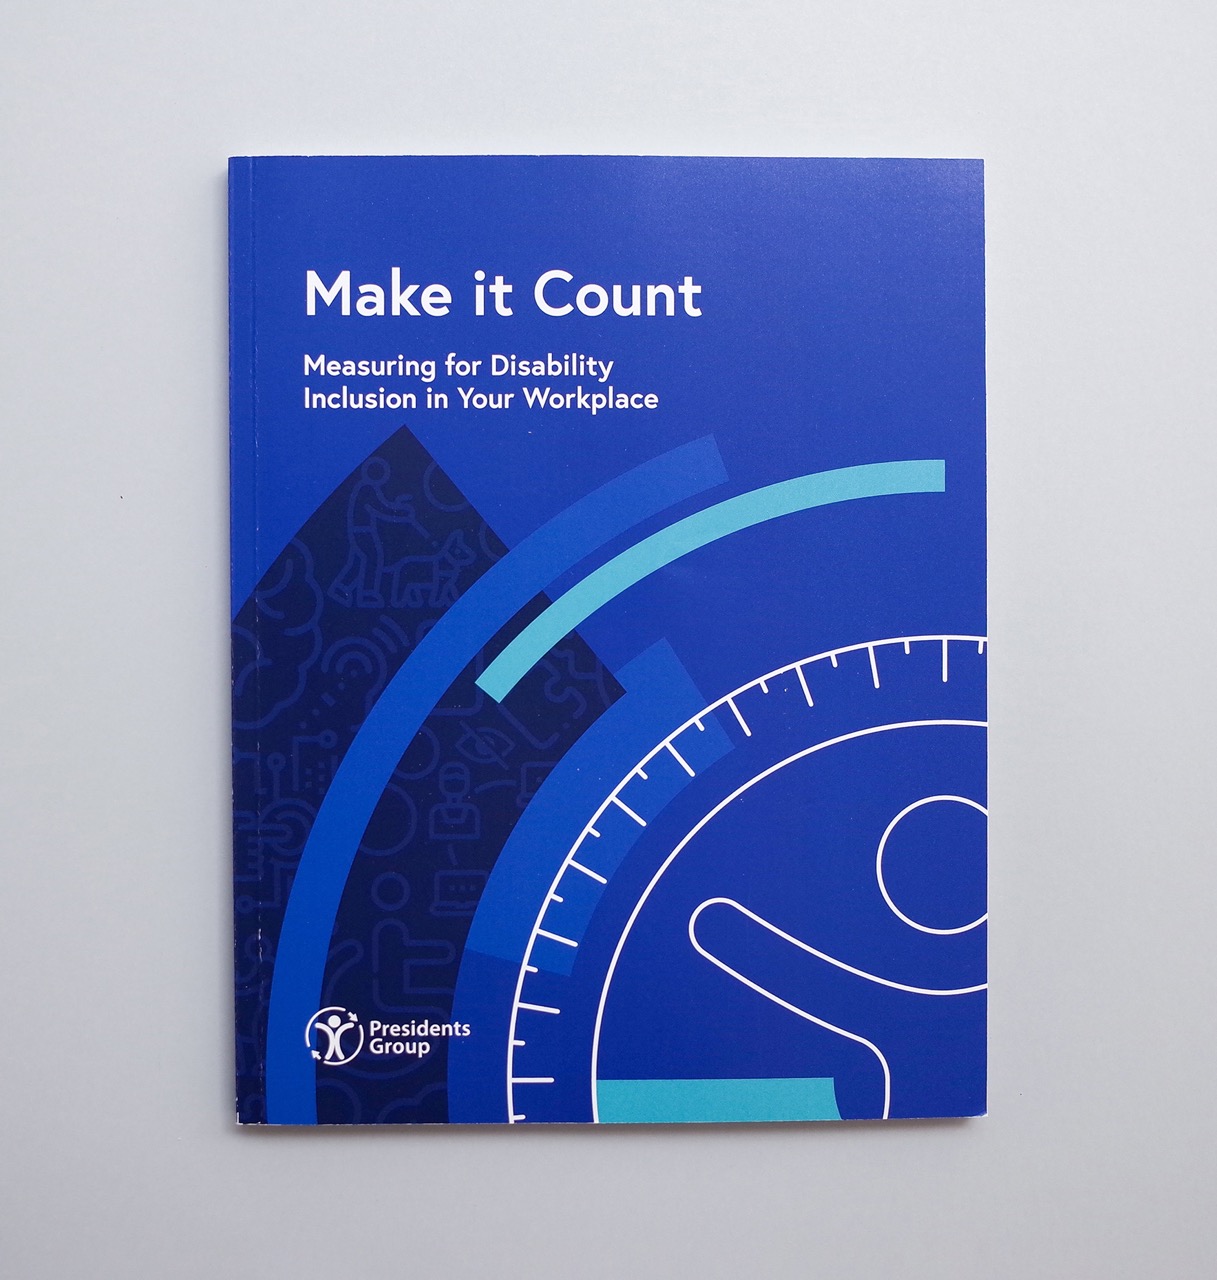 Make it Count: Measuring for Disability printed book, cover design | www.alicia-carvalho.com